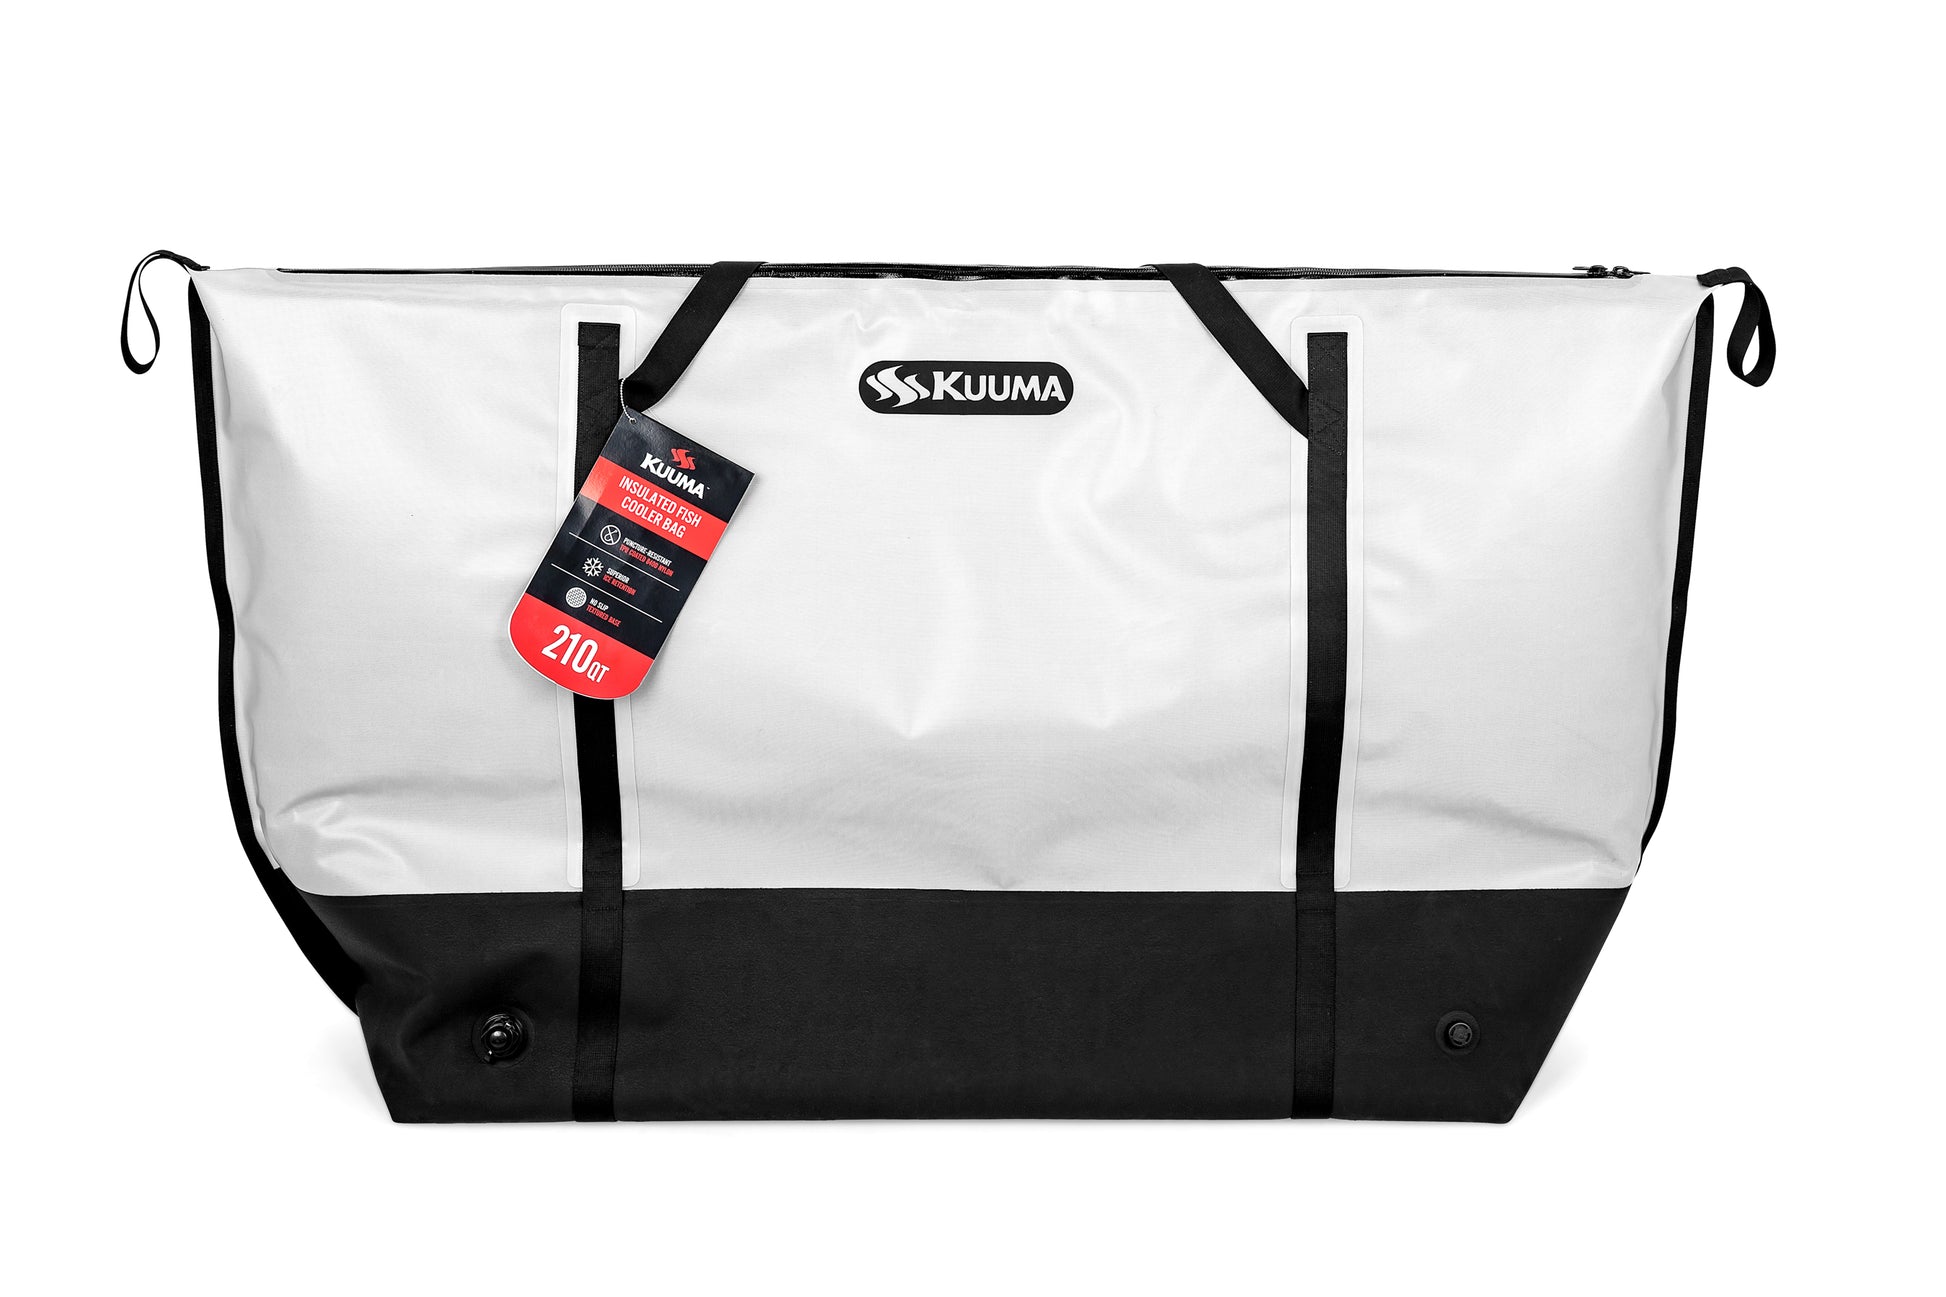 Kuuma Fish Bag Cooler - 210 Quart – Camco Marine